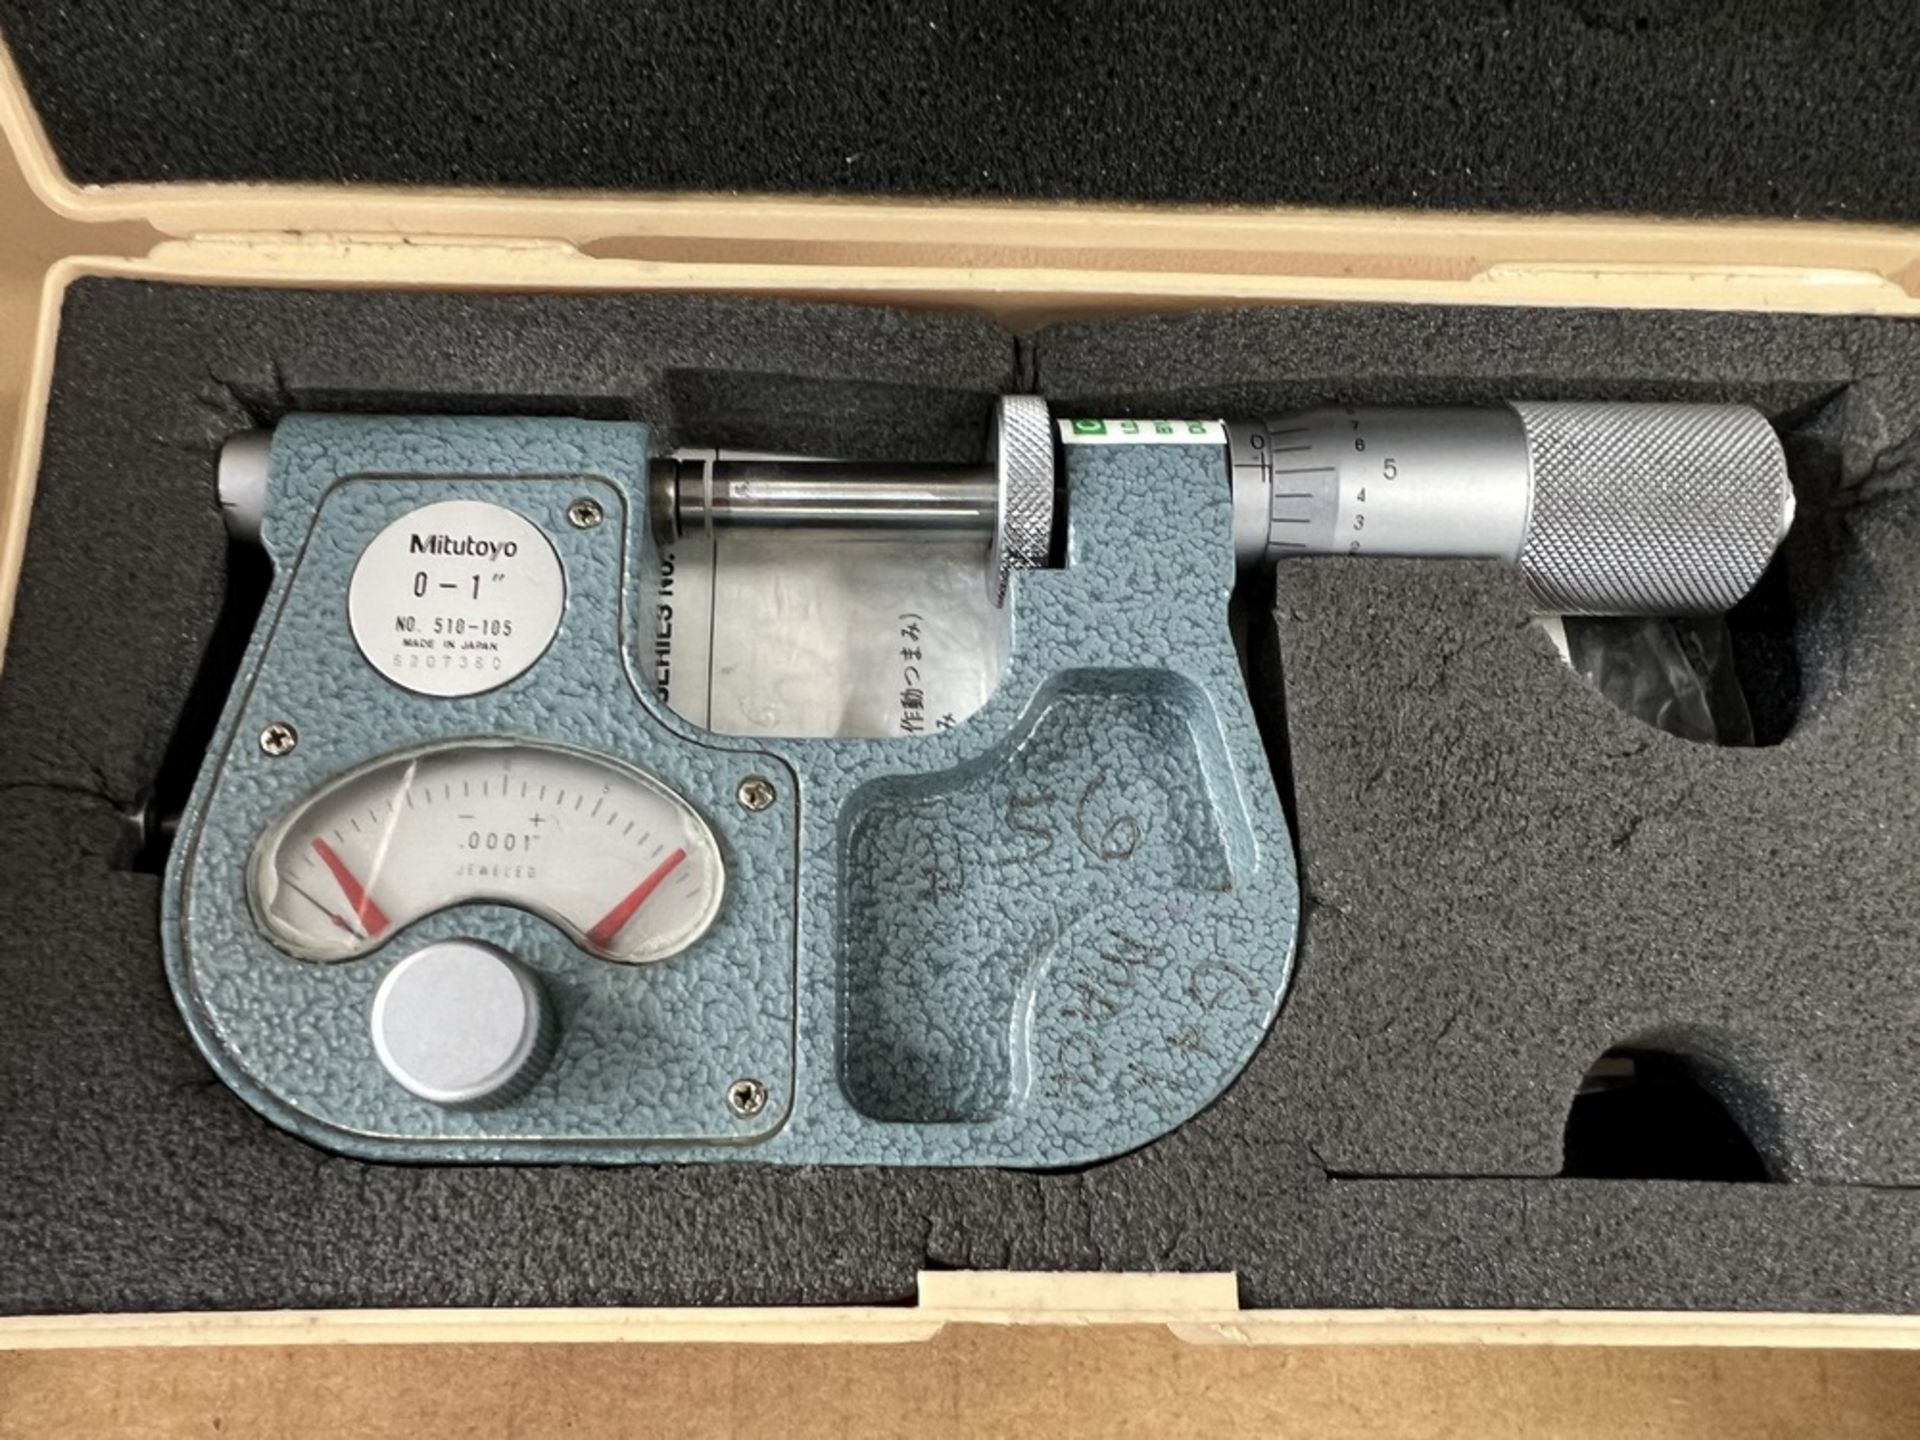 Mitutoyo 0-6" Depth Micrometer & Mitutoyo 0-1" Super Micrometer - Image 3 of 8